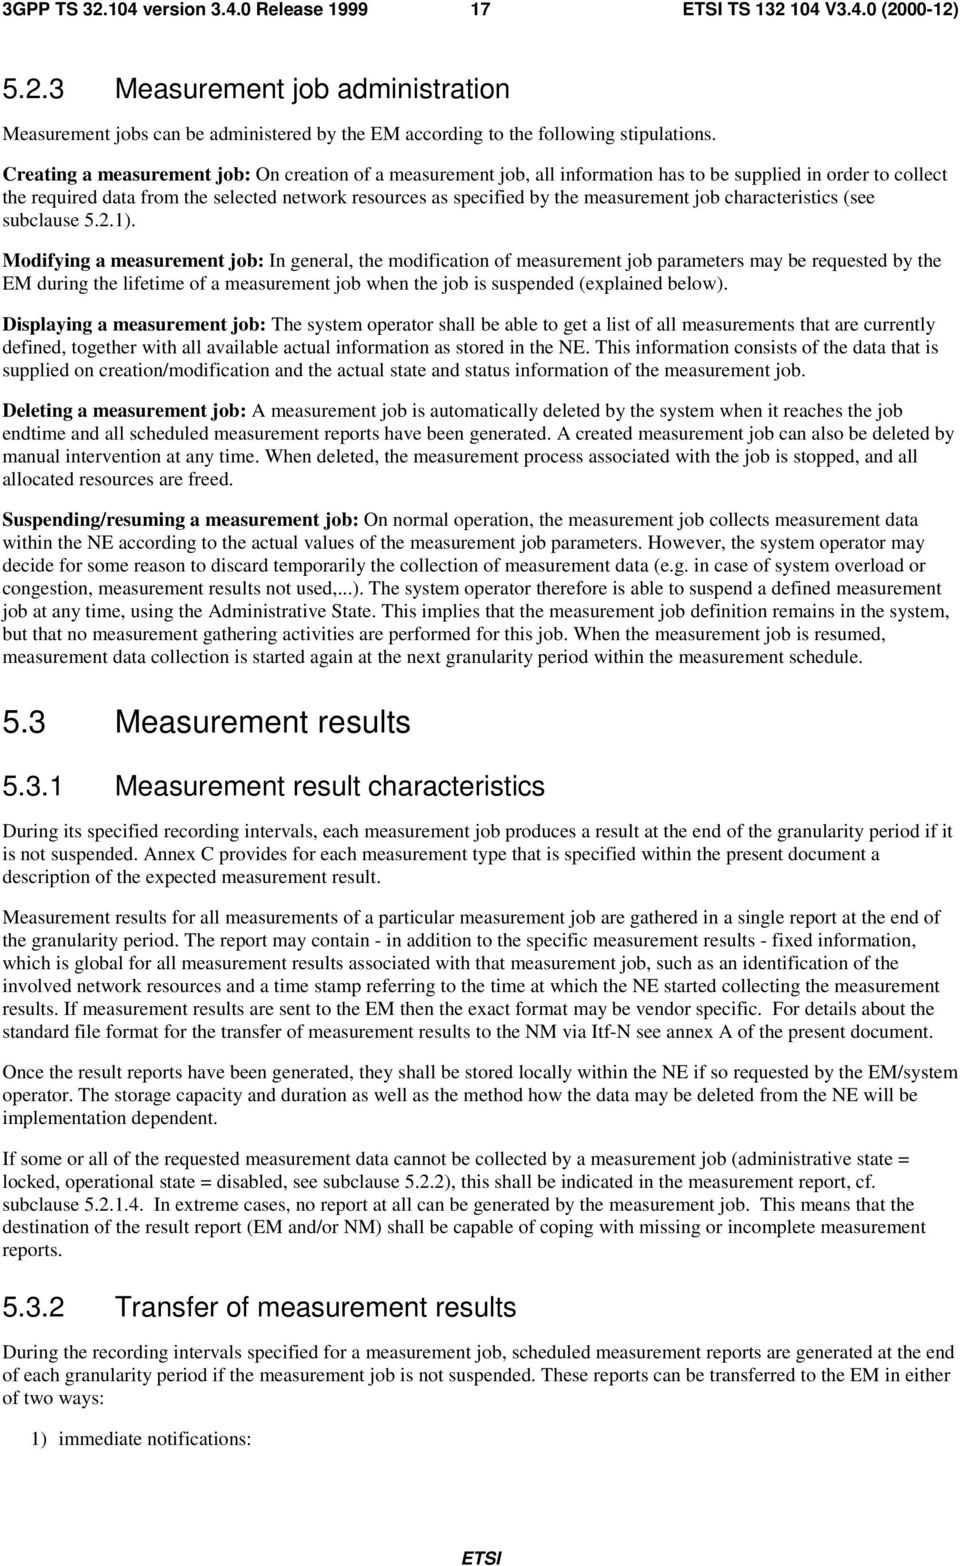 measurement job characteristics (see subclause 5.2.1).